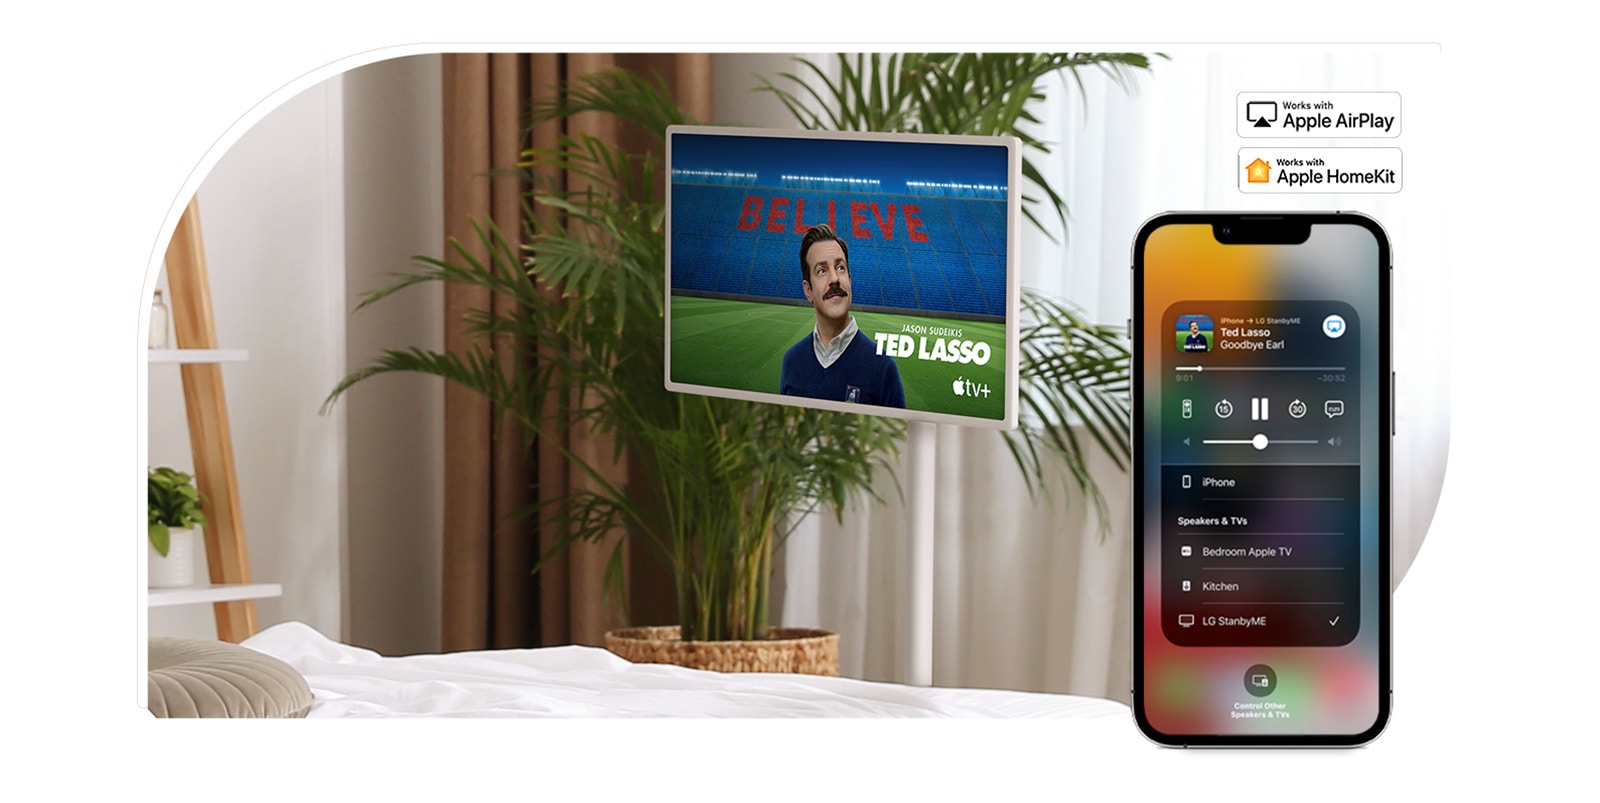 tv-stanbyme-27art10-13-connectivity-apple-airPlay-desktop